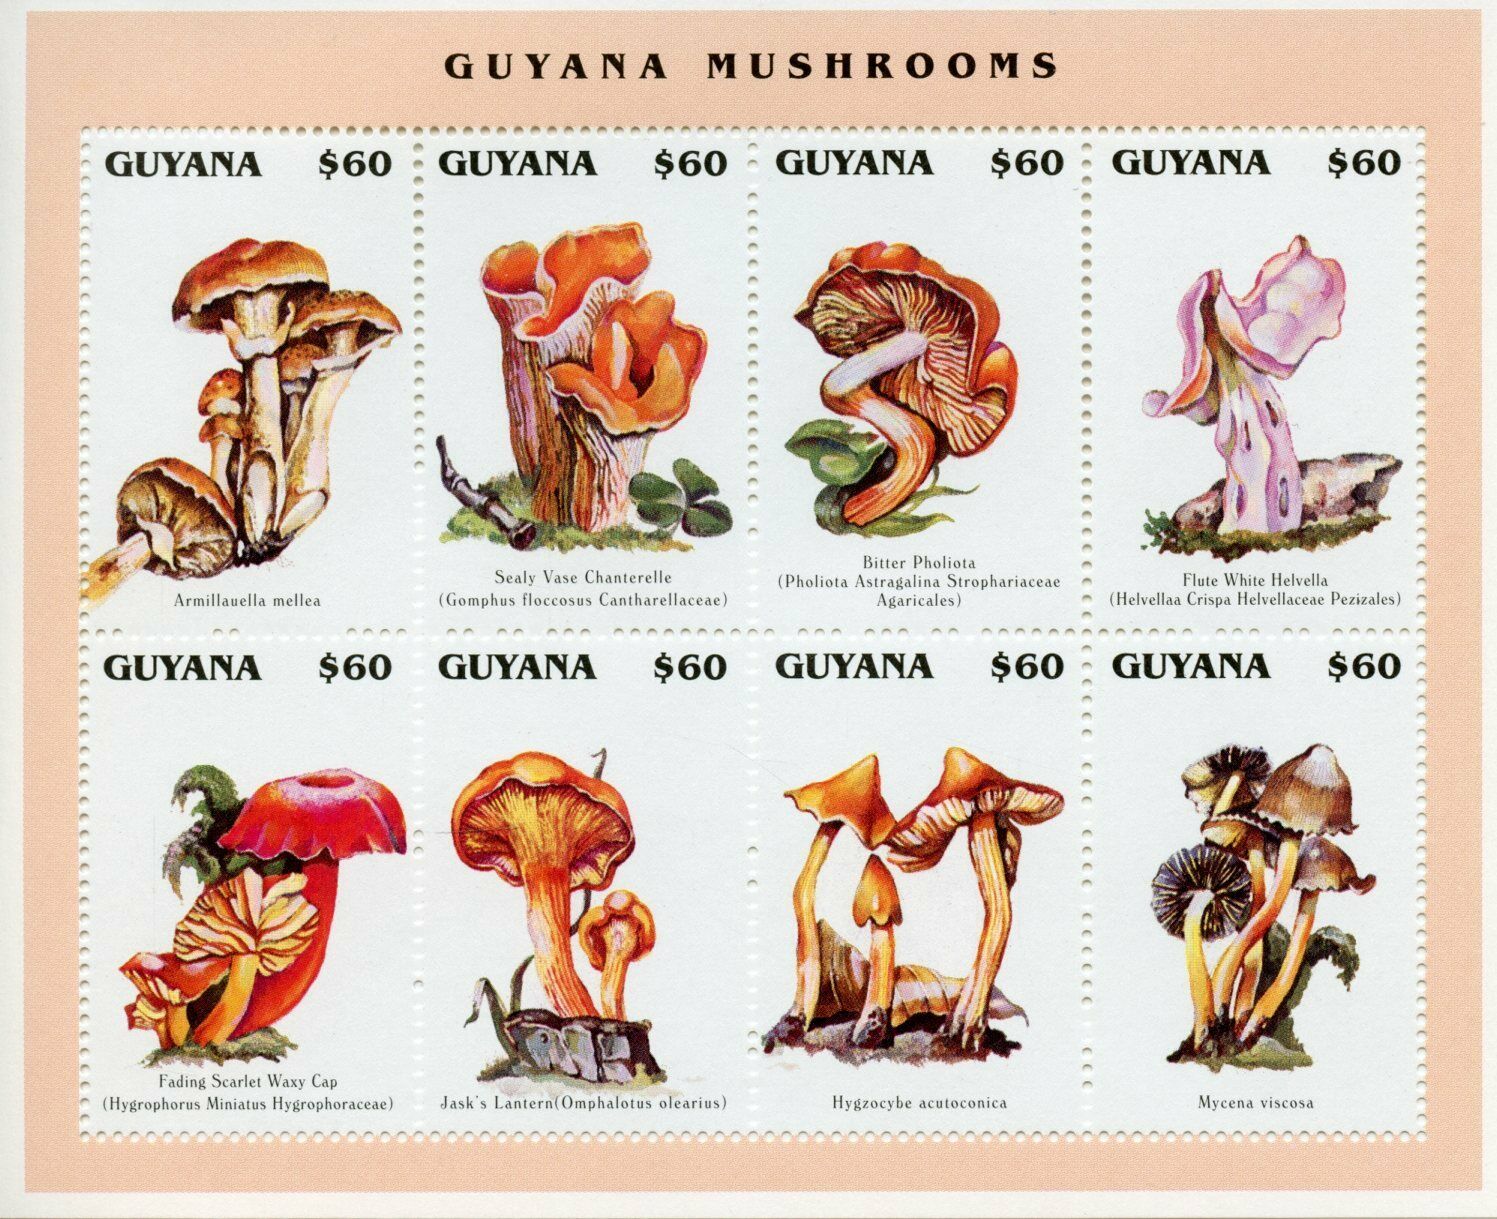 Guyana Mushrooms Stamps 1996 MNH Chanterelle Helvella Pholiota Mushroom 8v M/S I